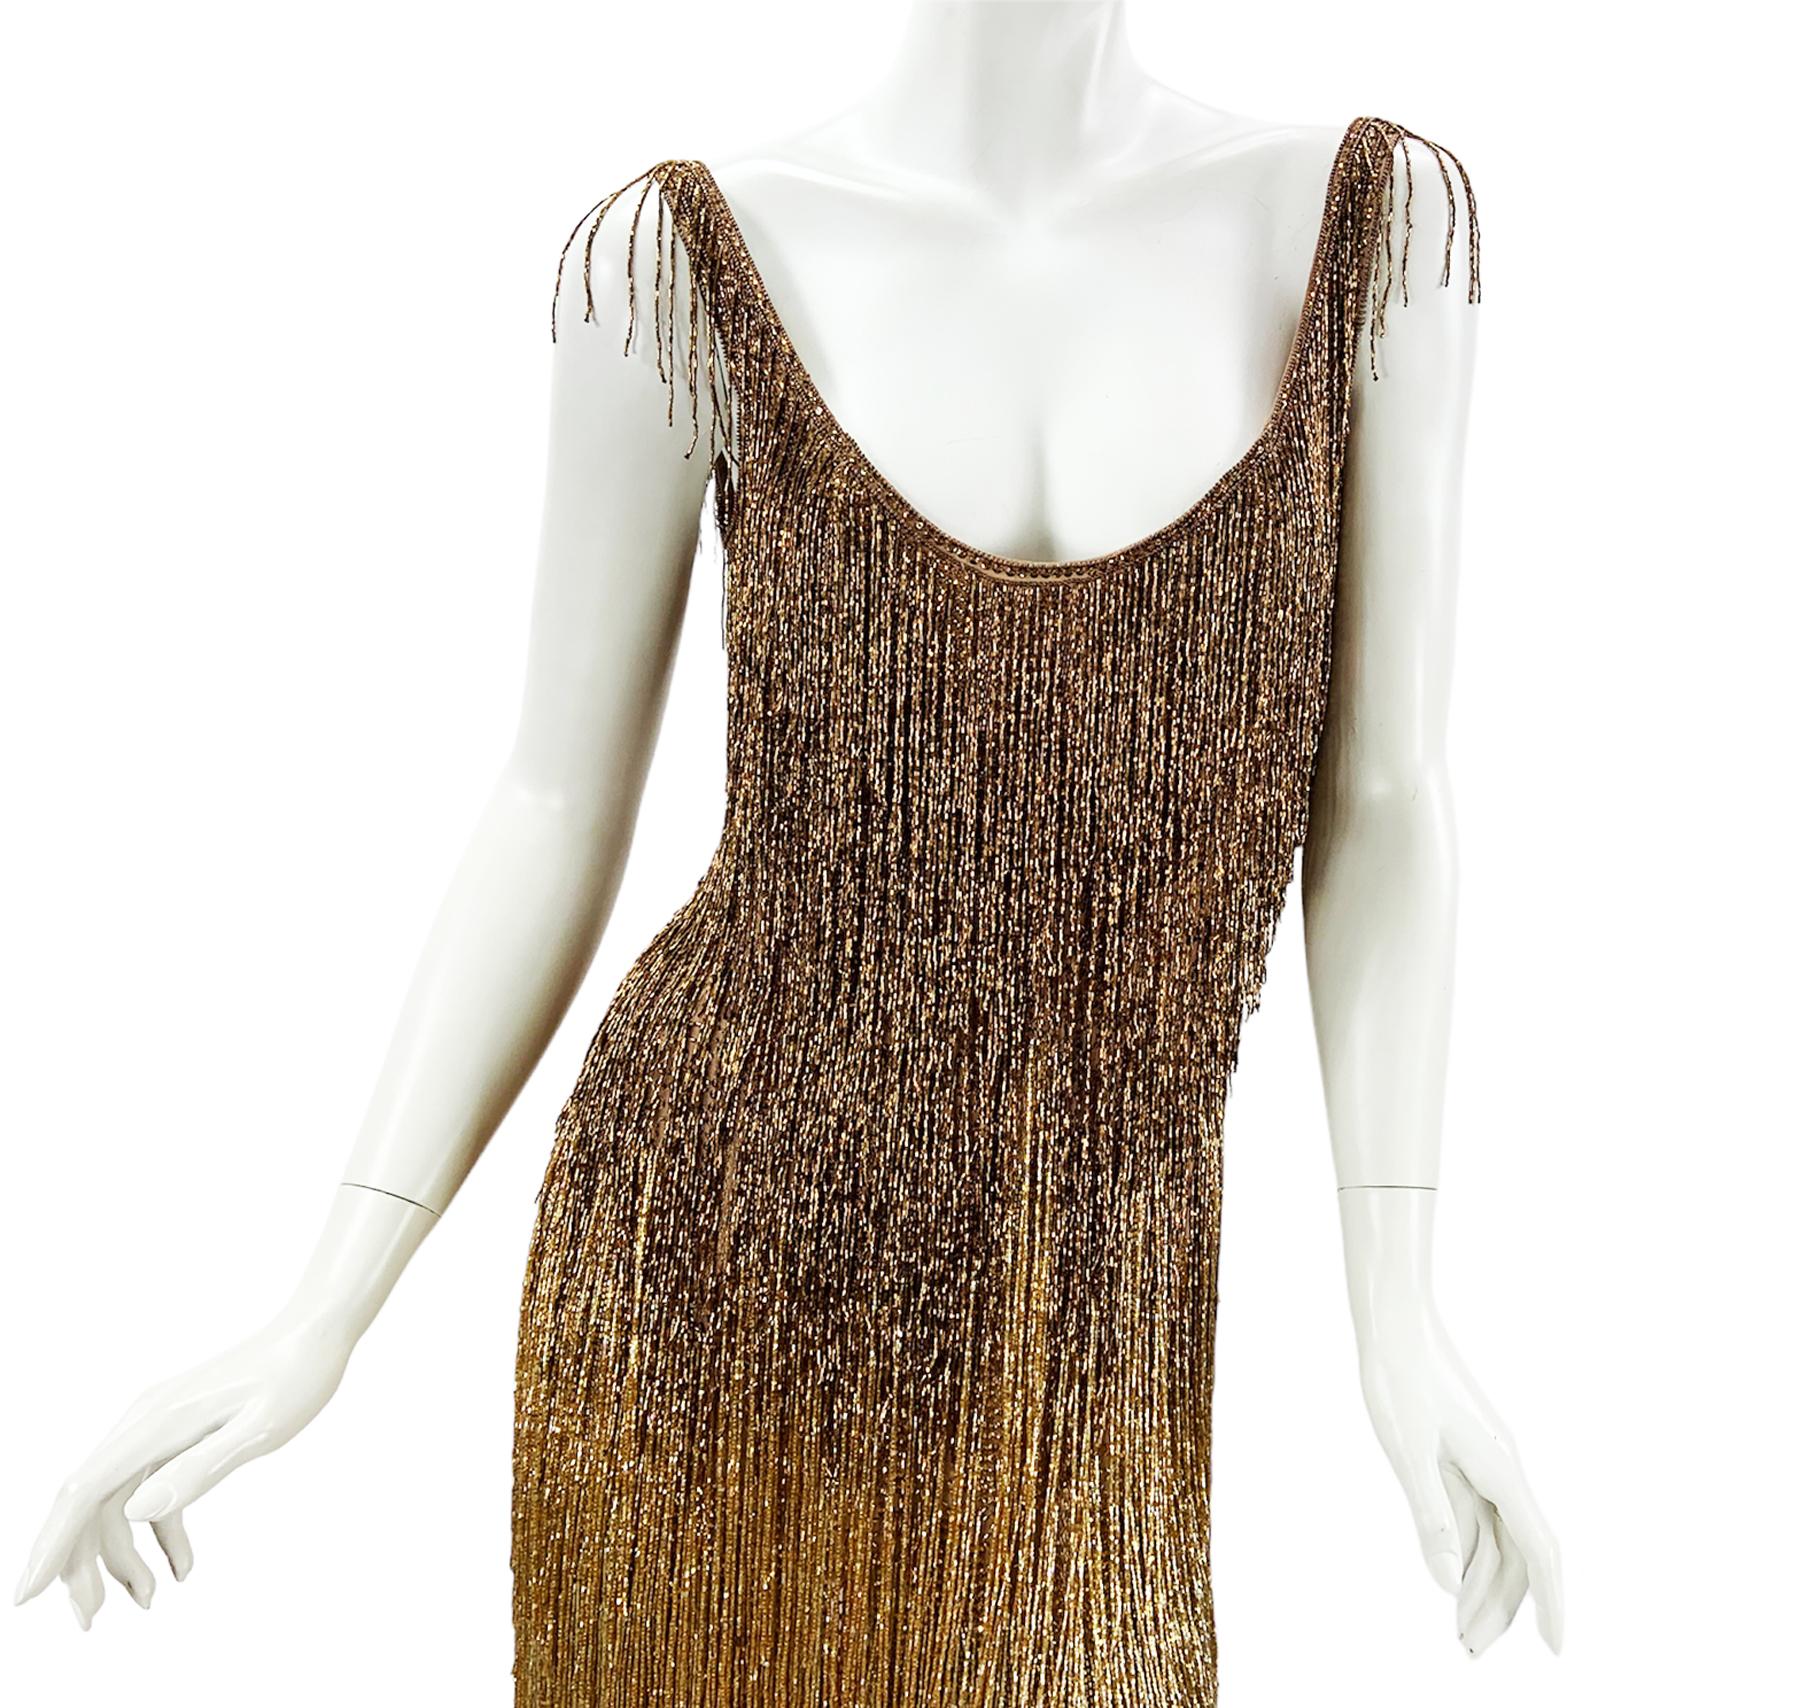 Iconic MUSEUM Roberto Cavalli Fringe Beaded Dress as seen on TAYLOR SWIFT It. 40 5